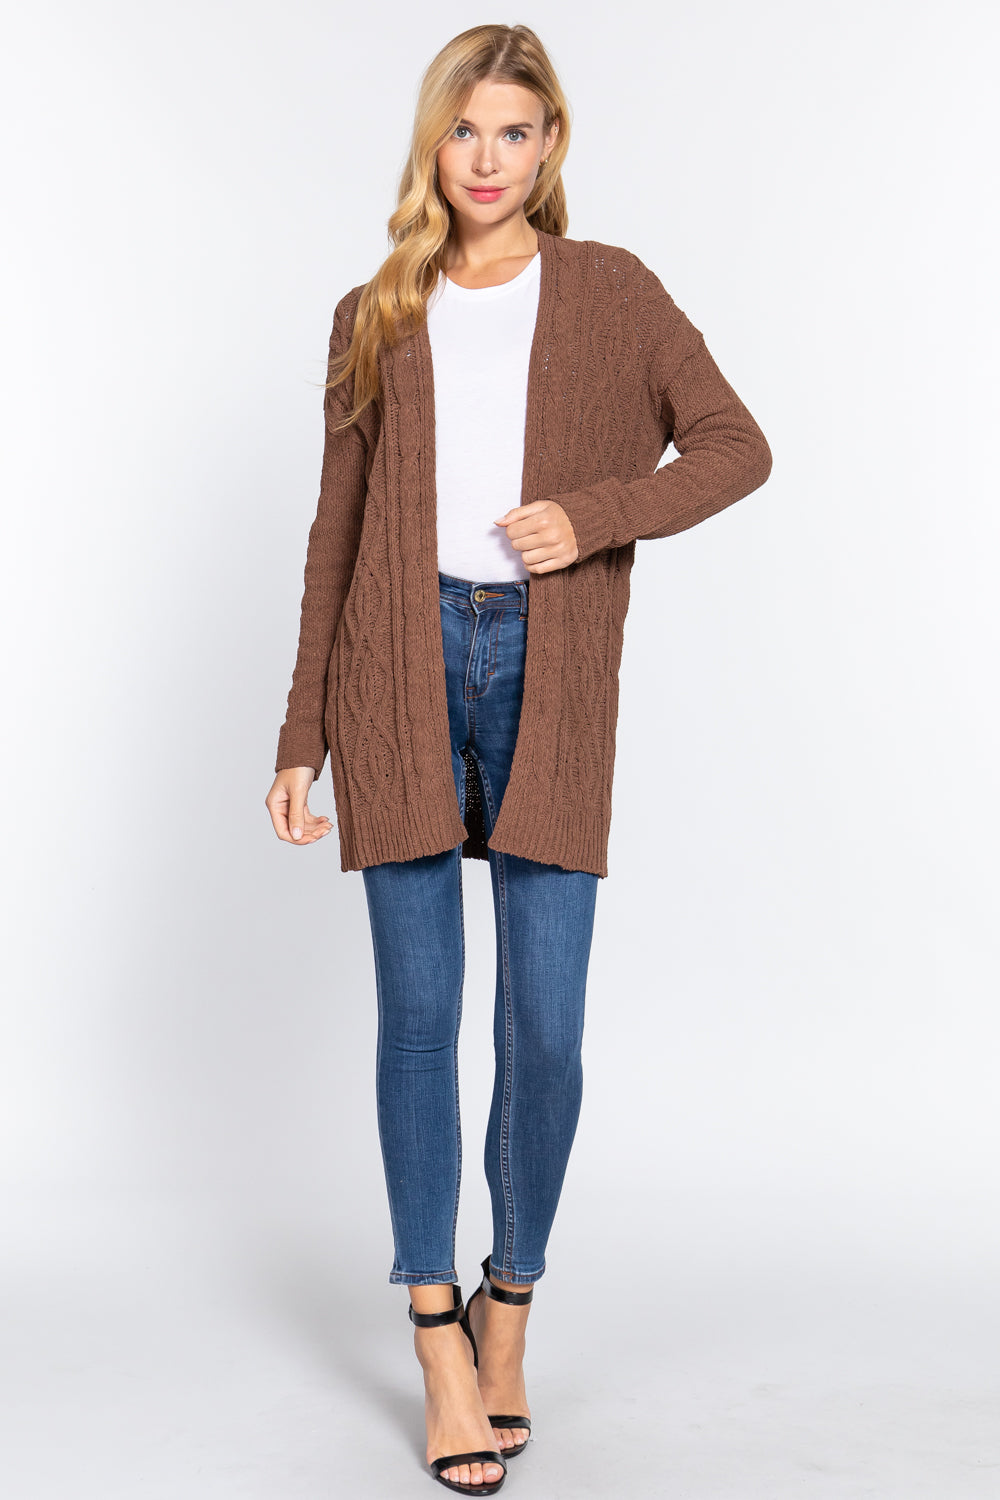 Chenille Sweater Cardigan Sunny EvE Fashion